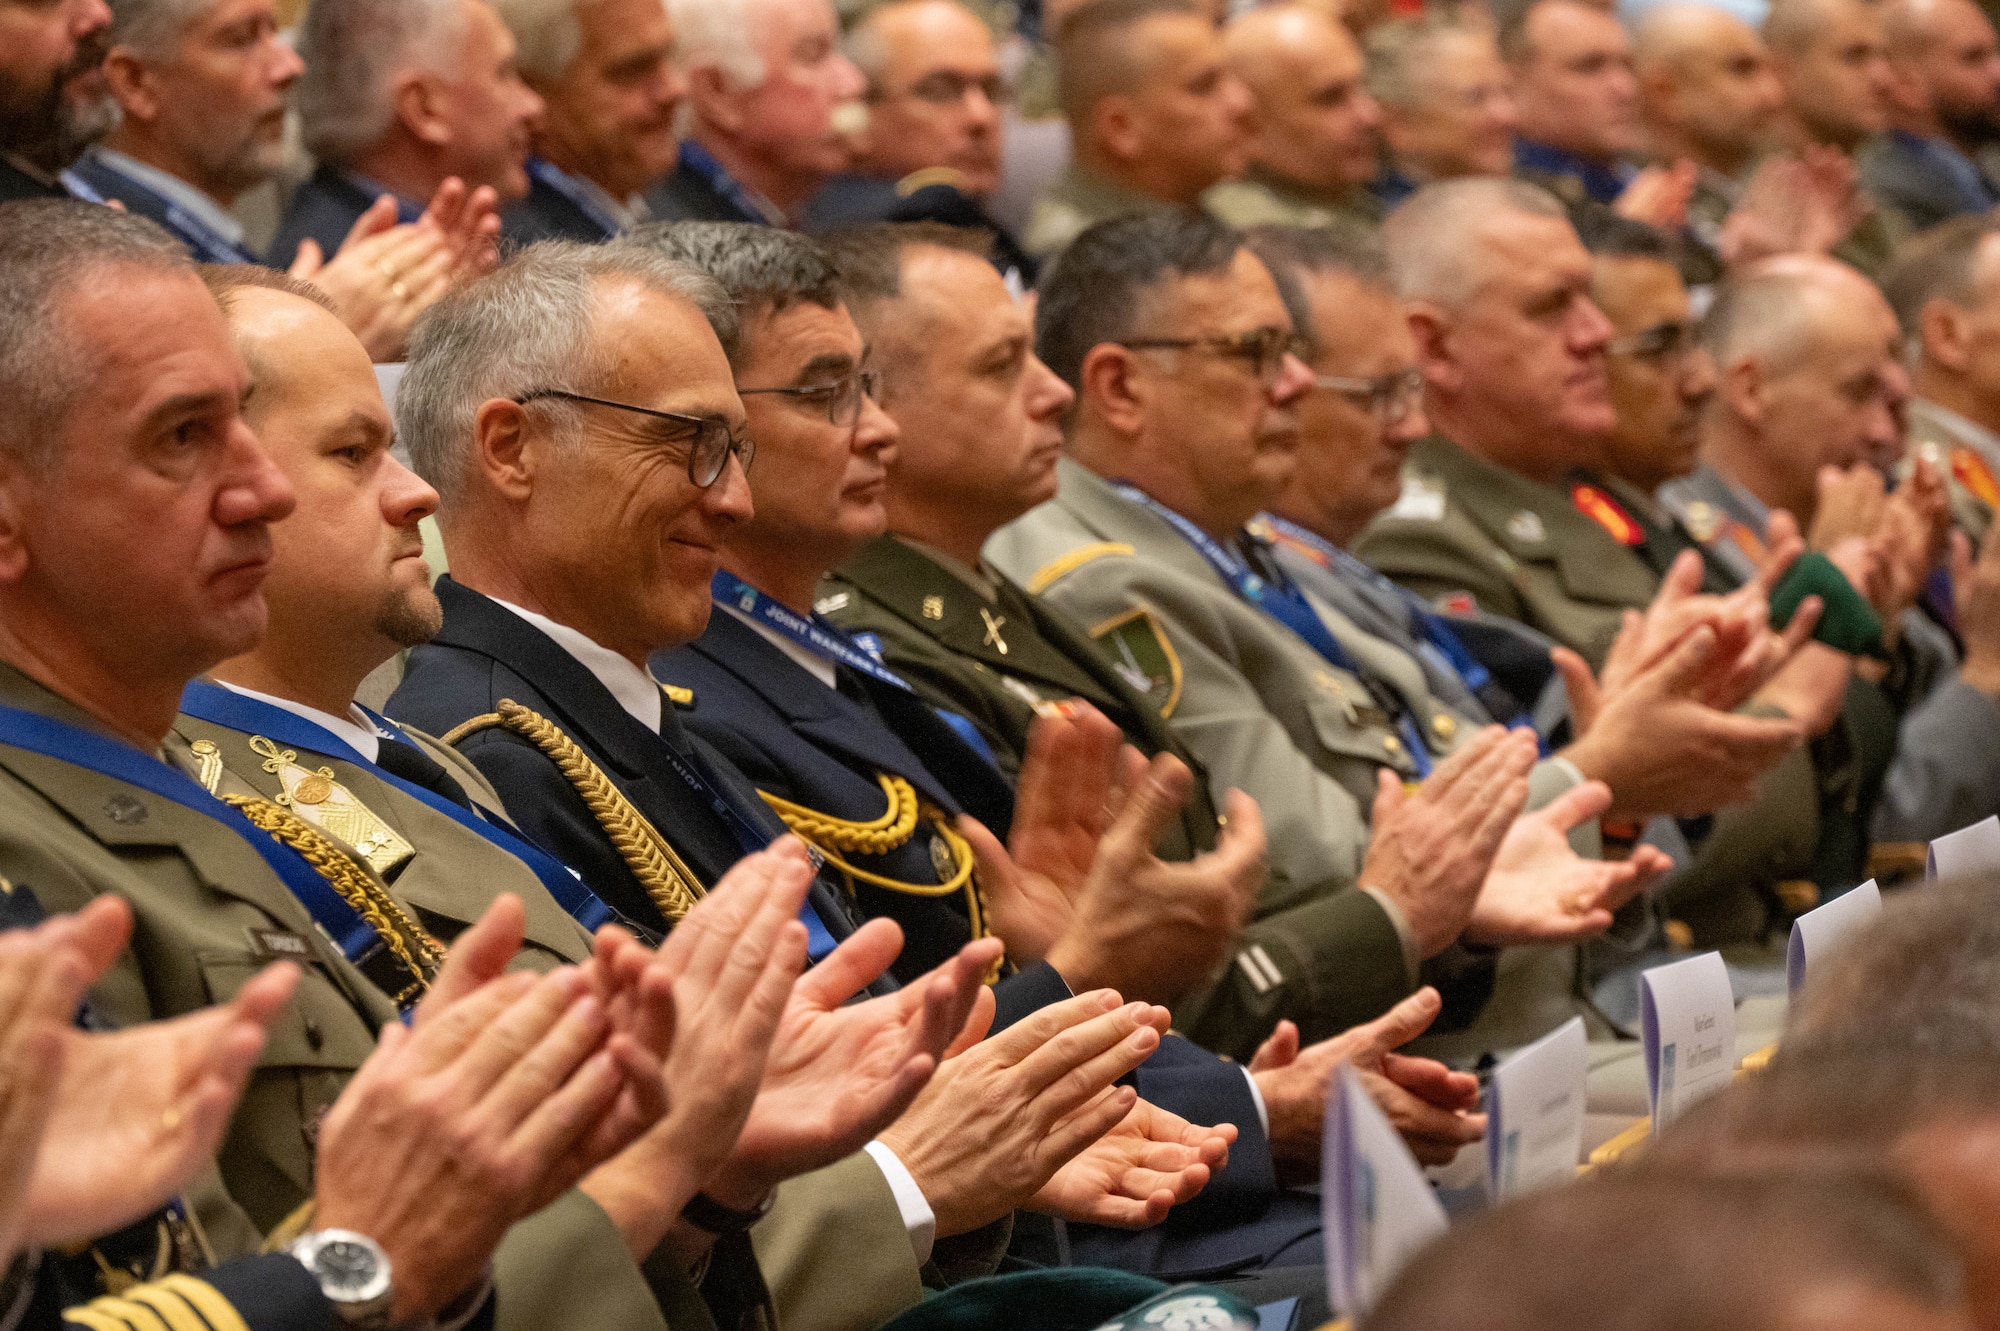 Military and civilian dignitaries applaud during a presentation.